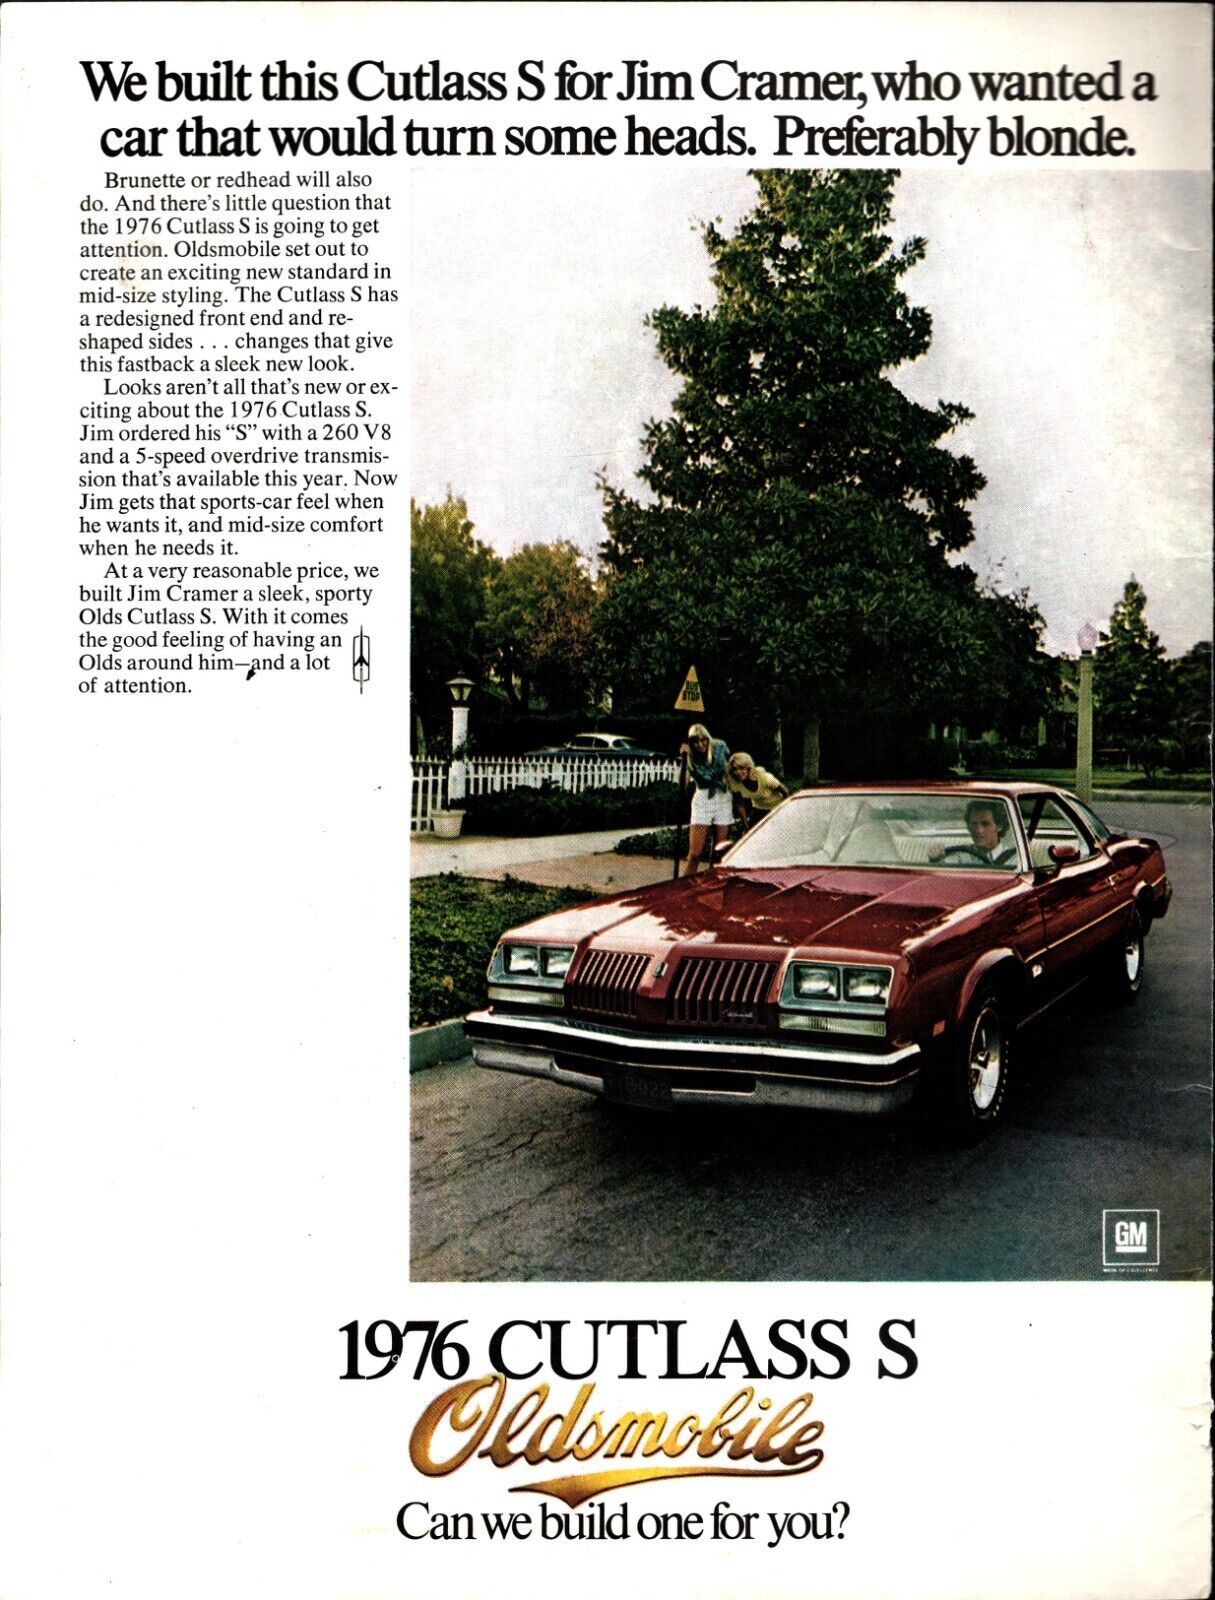 Vintage 1976 Oldsmobile Cutlass S Built For Jim Cramer Car Auto ad e1